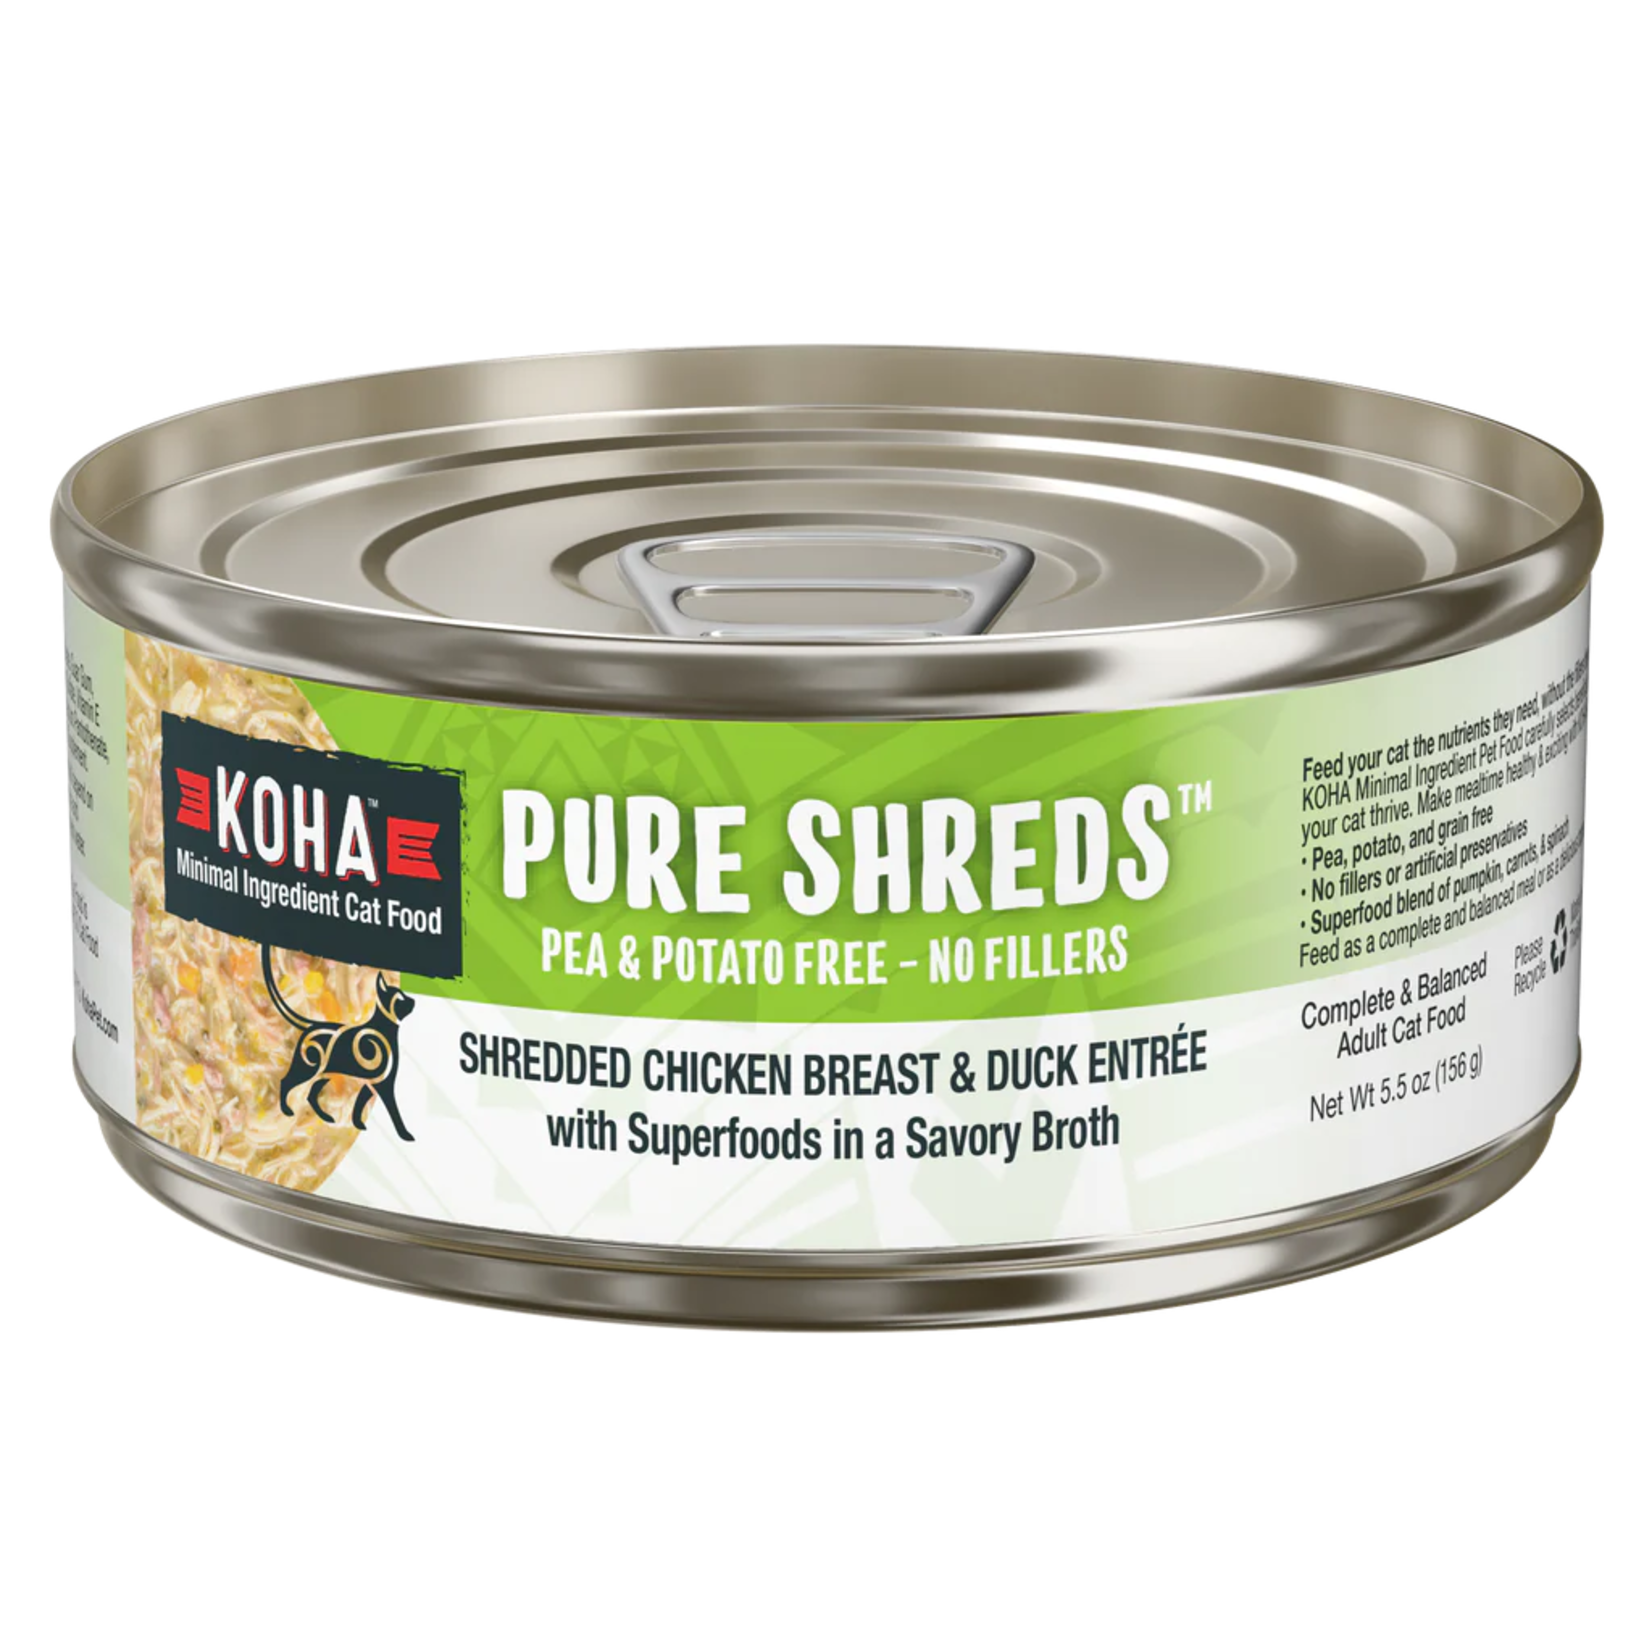 Koha Pet Food Koha Pet Food Pure Shreds - Shredded Chicken Breast & Duck Entrée for Cats